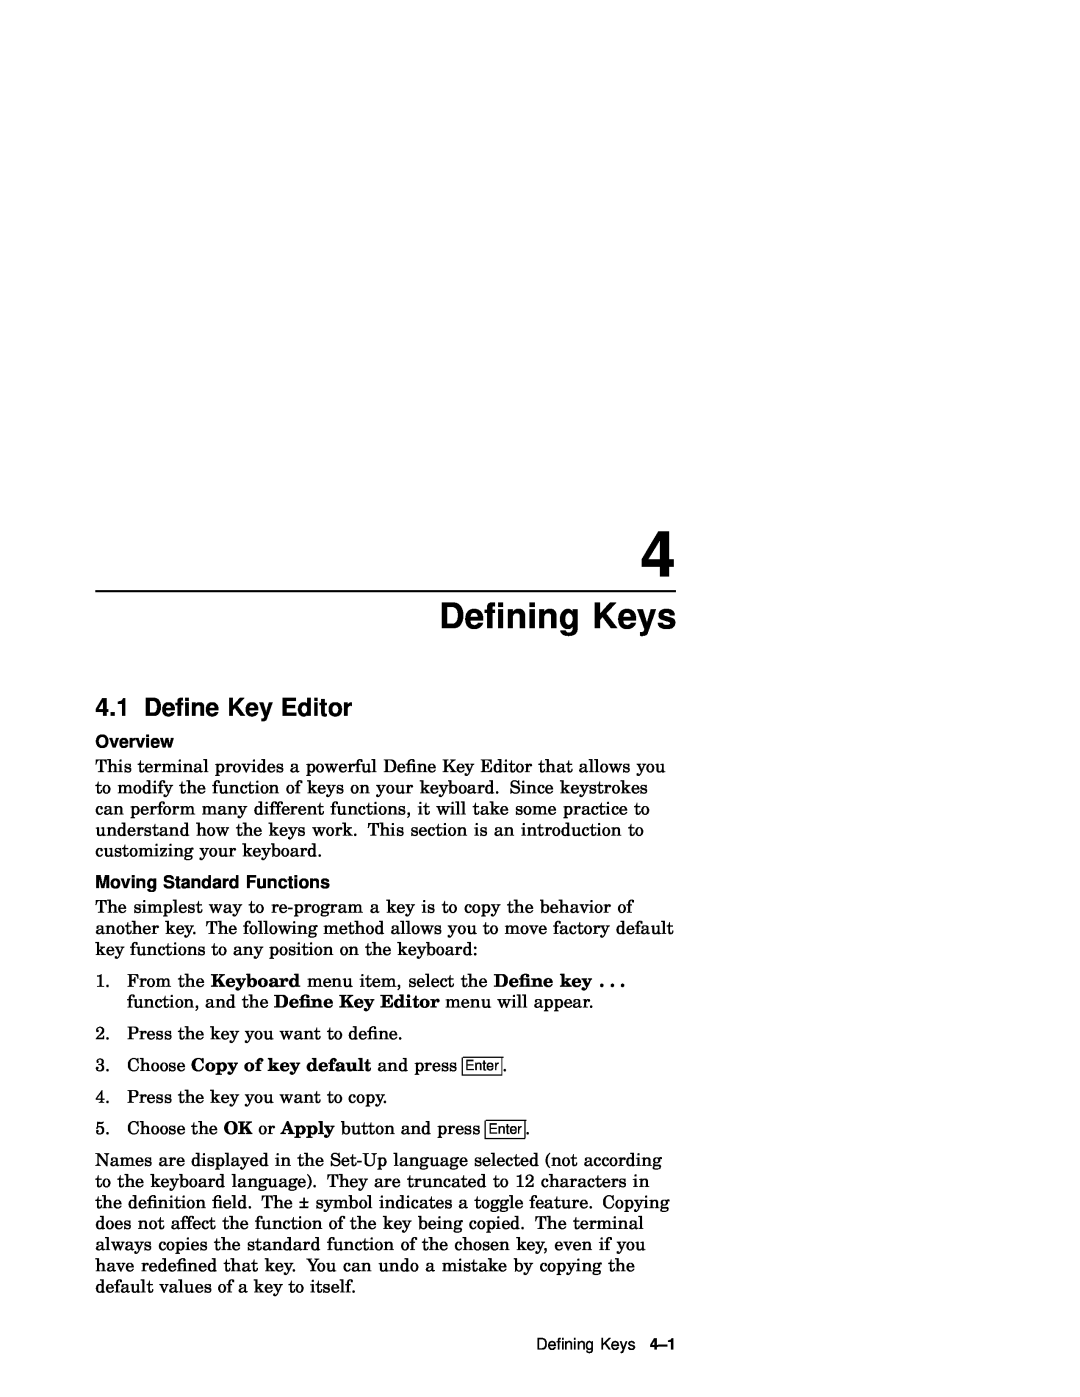 IBM WS525 manual Deﬁning Keys, 4.1 Deﬁne Key Editor, Moving Standard Functions, Choose Copy of key default and press Enter 